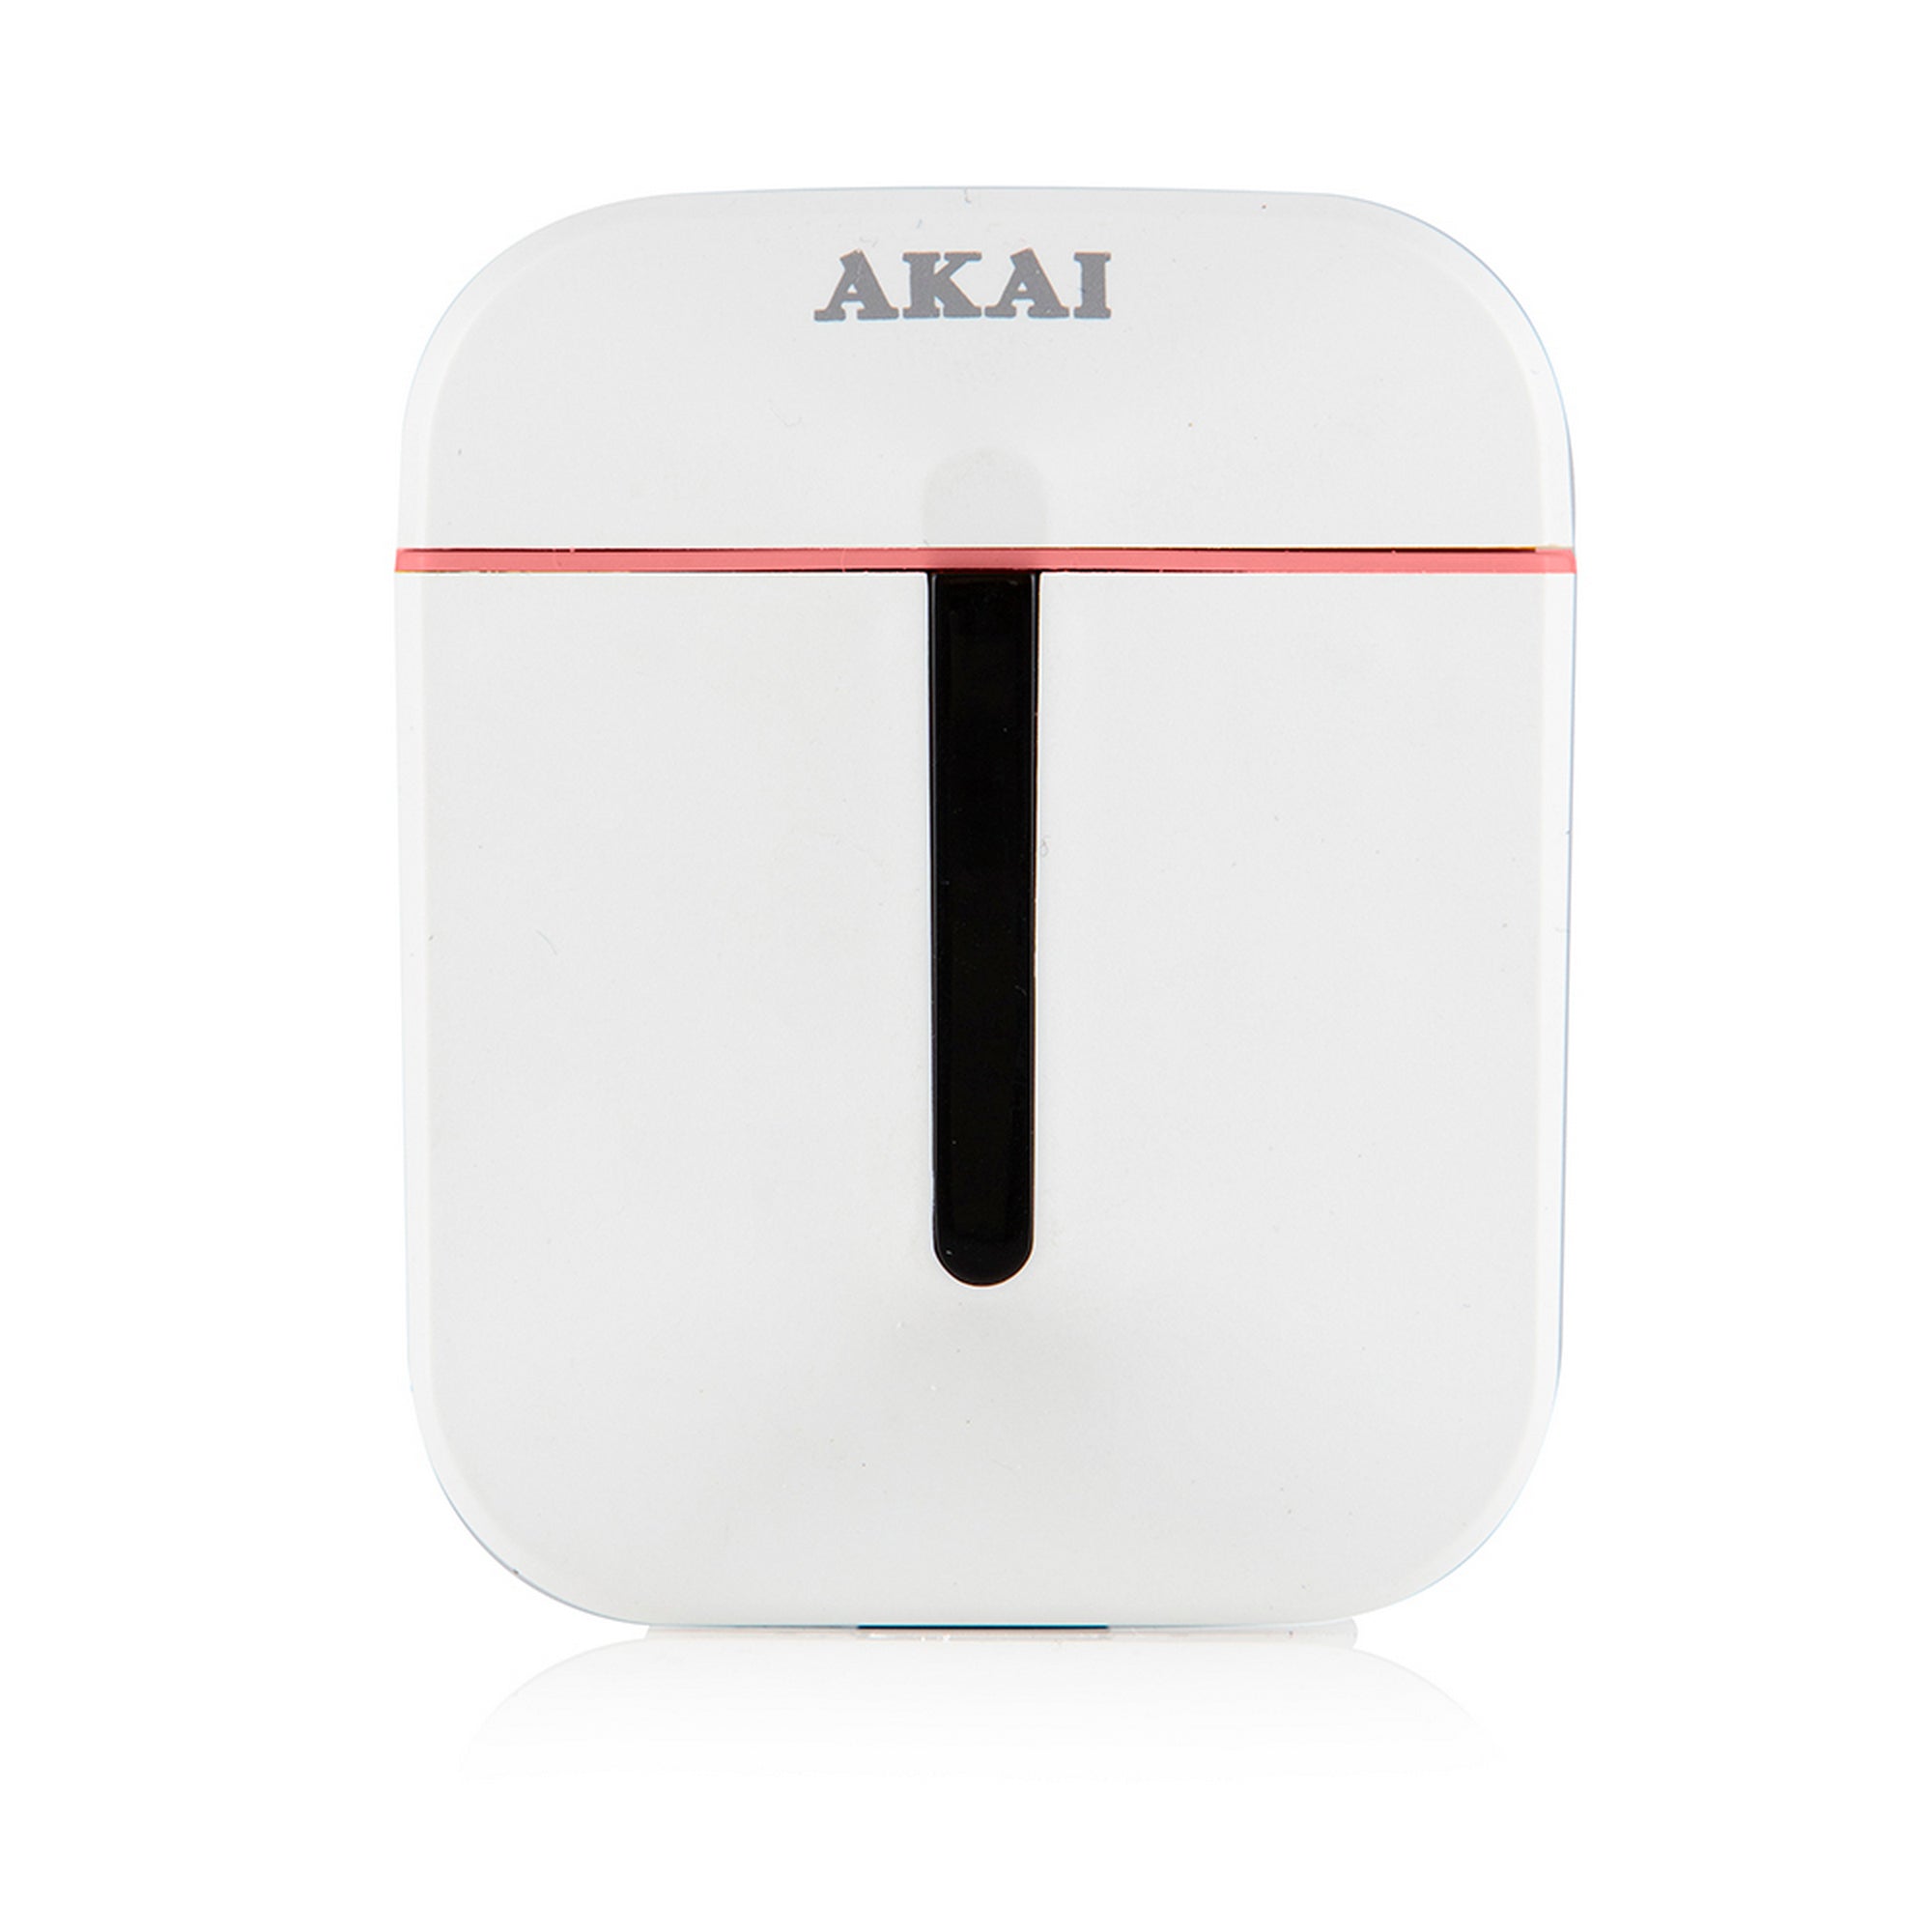 Akai Wireless Bluetooth Earbuds Coral Packshot 4